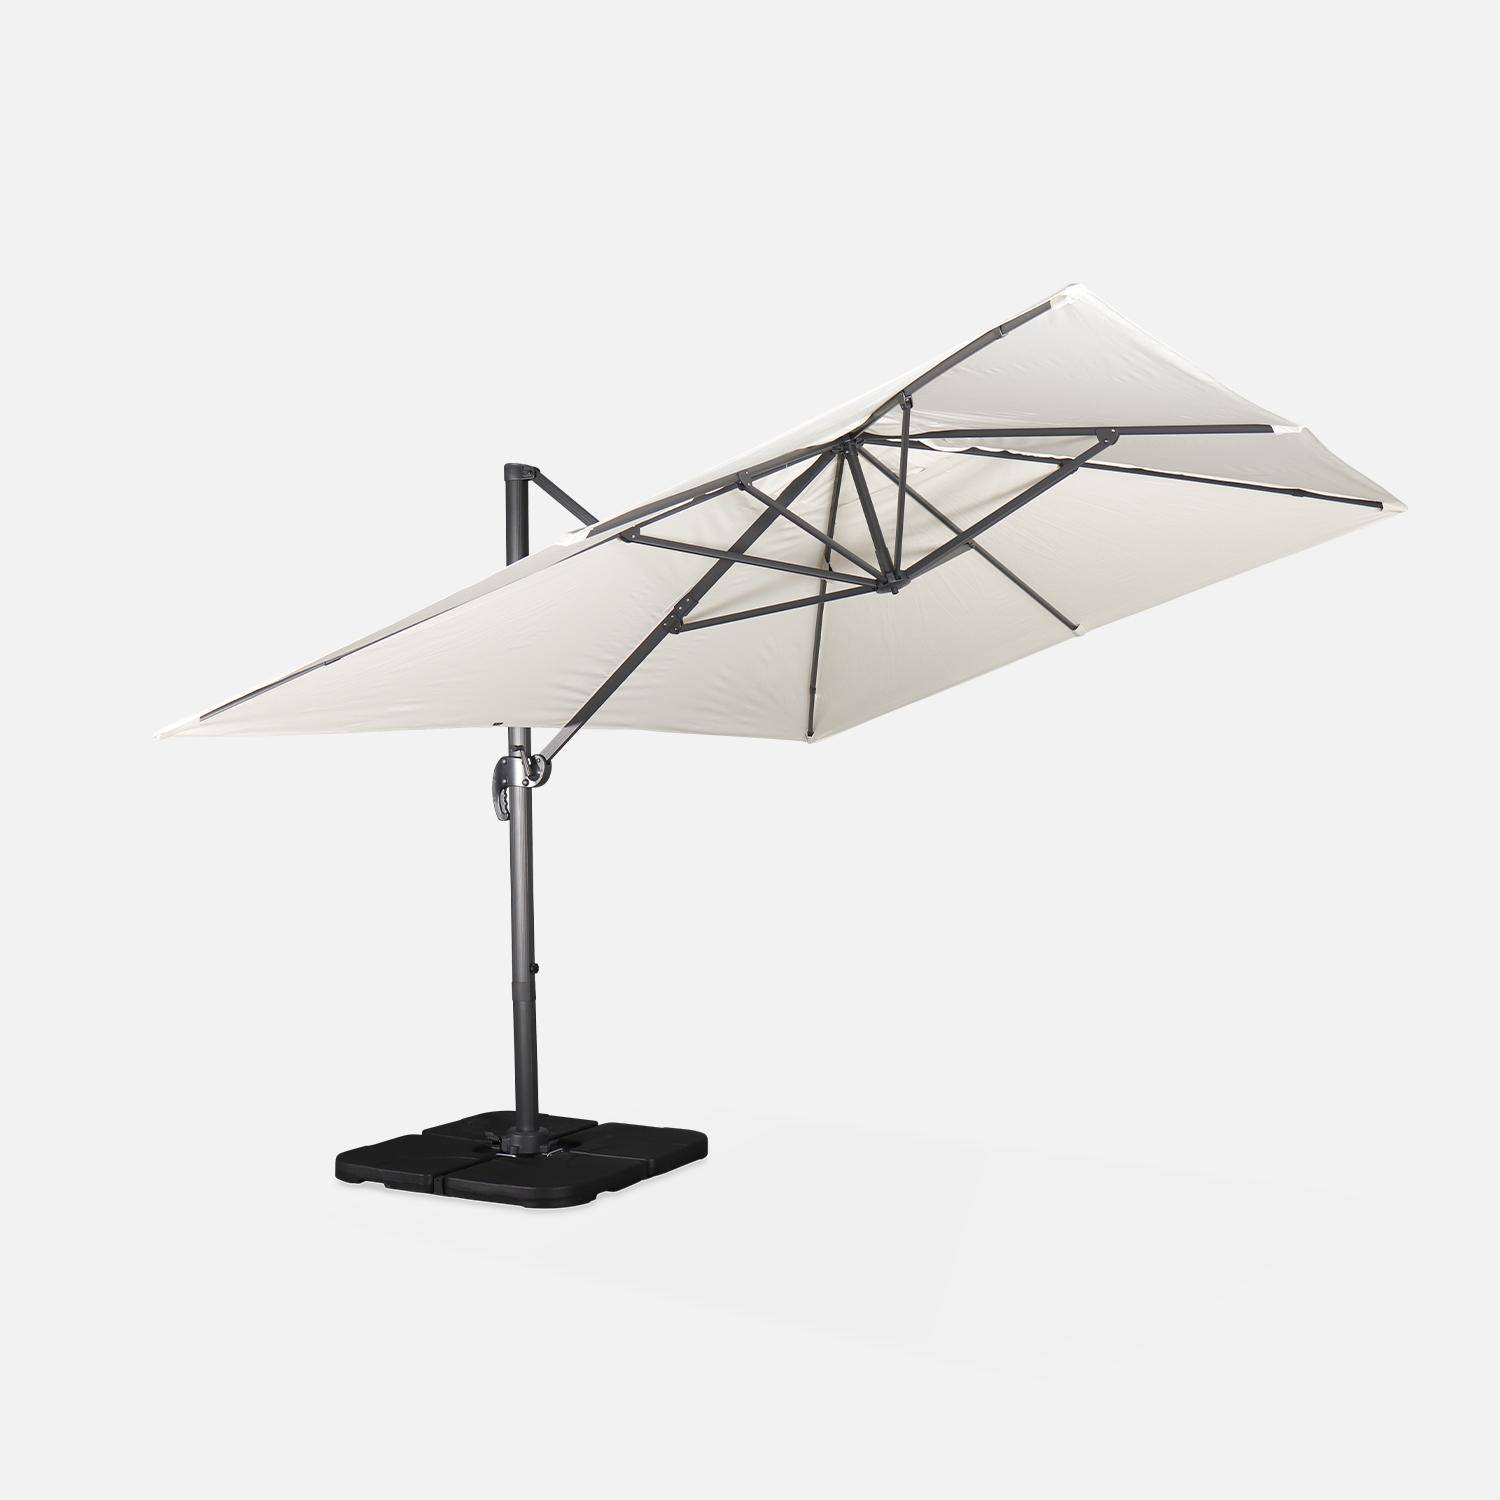 Ecru rechthoekige parasol 3x4m + verzwaarde tegels 50x50cm,sweeek,Photo5